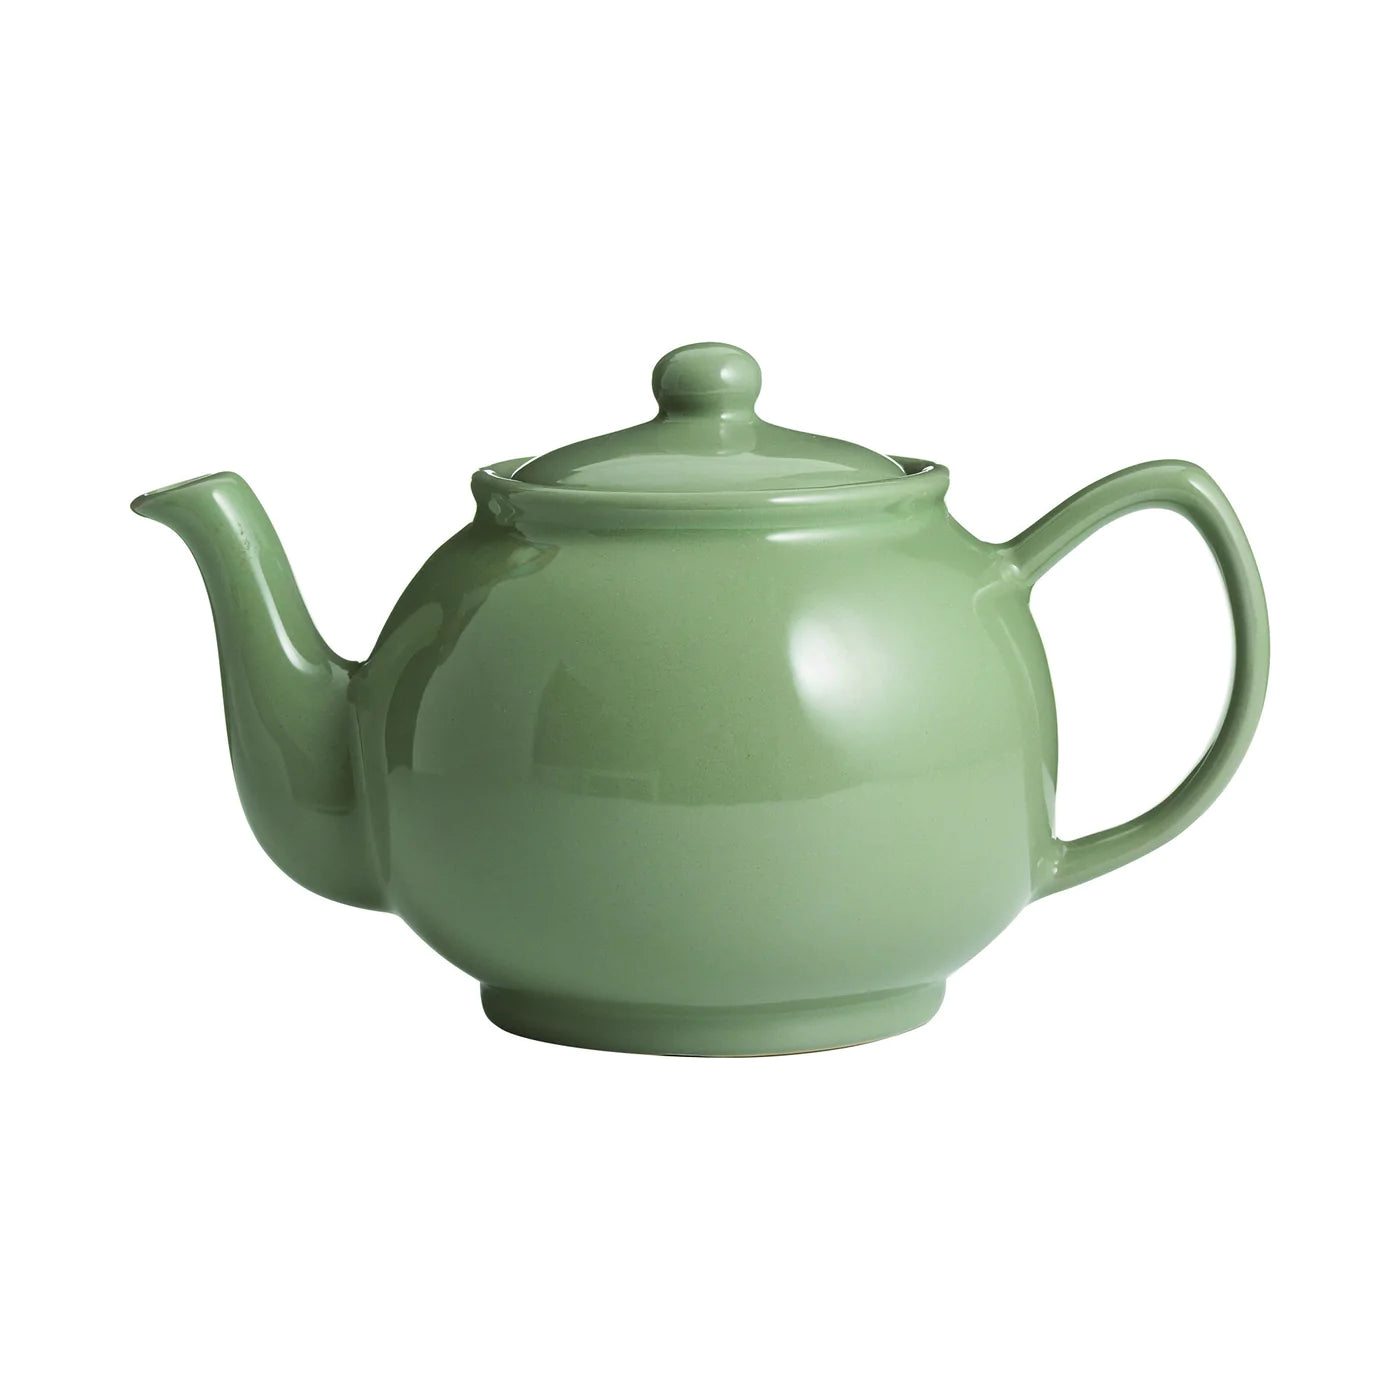 6 Cup Teapot 39oz with Diffuser / Filter - Price & Kensington